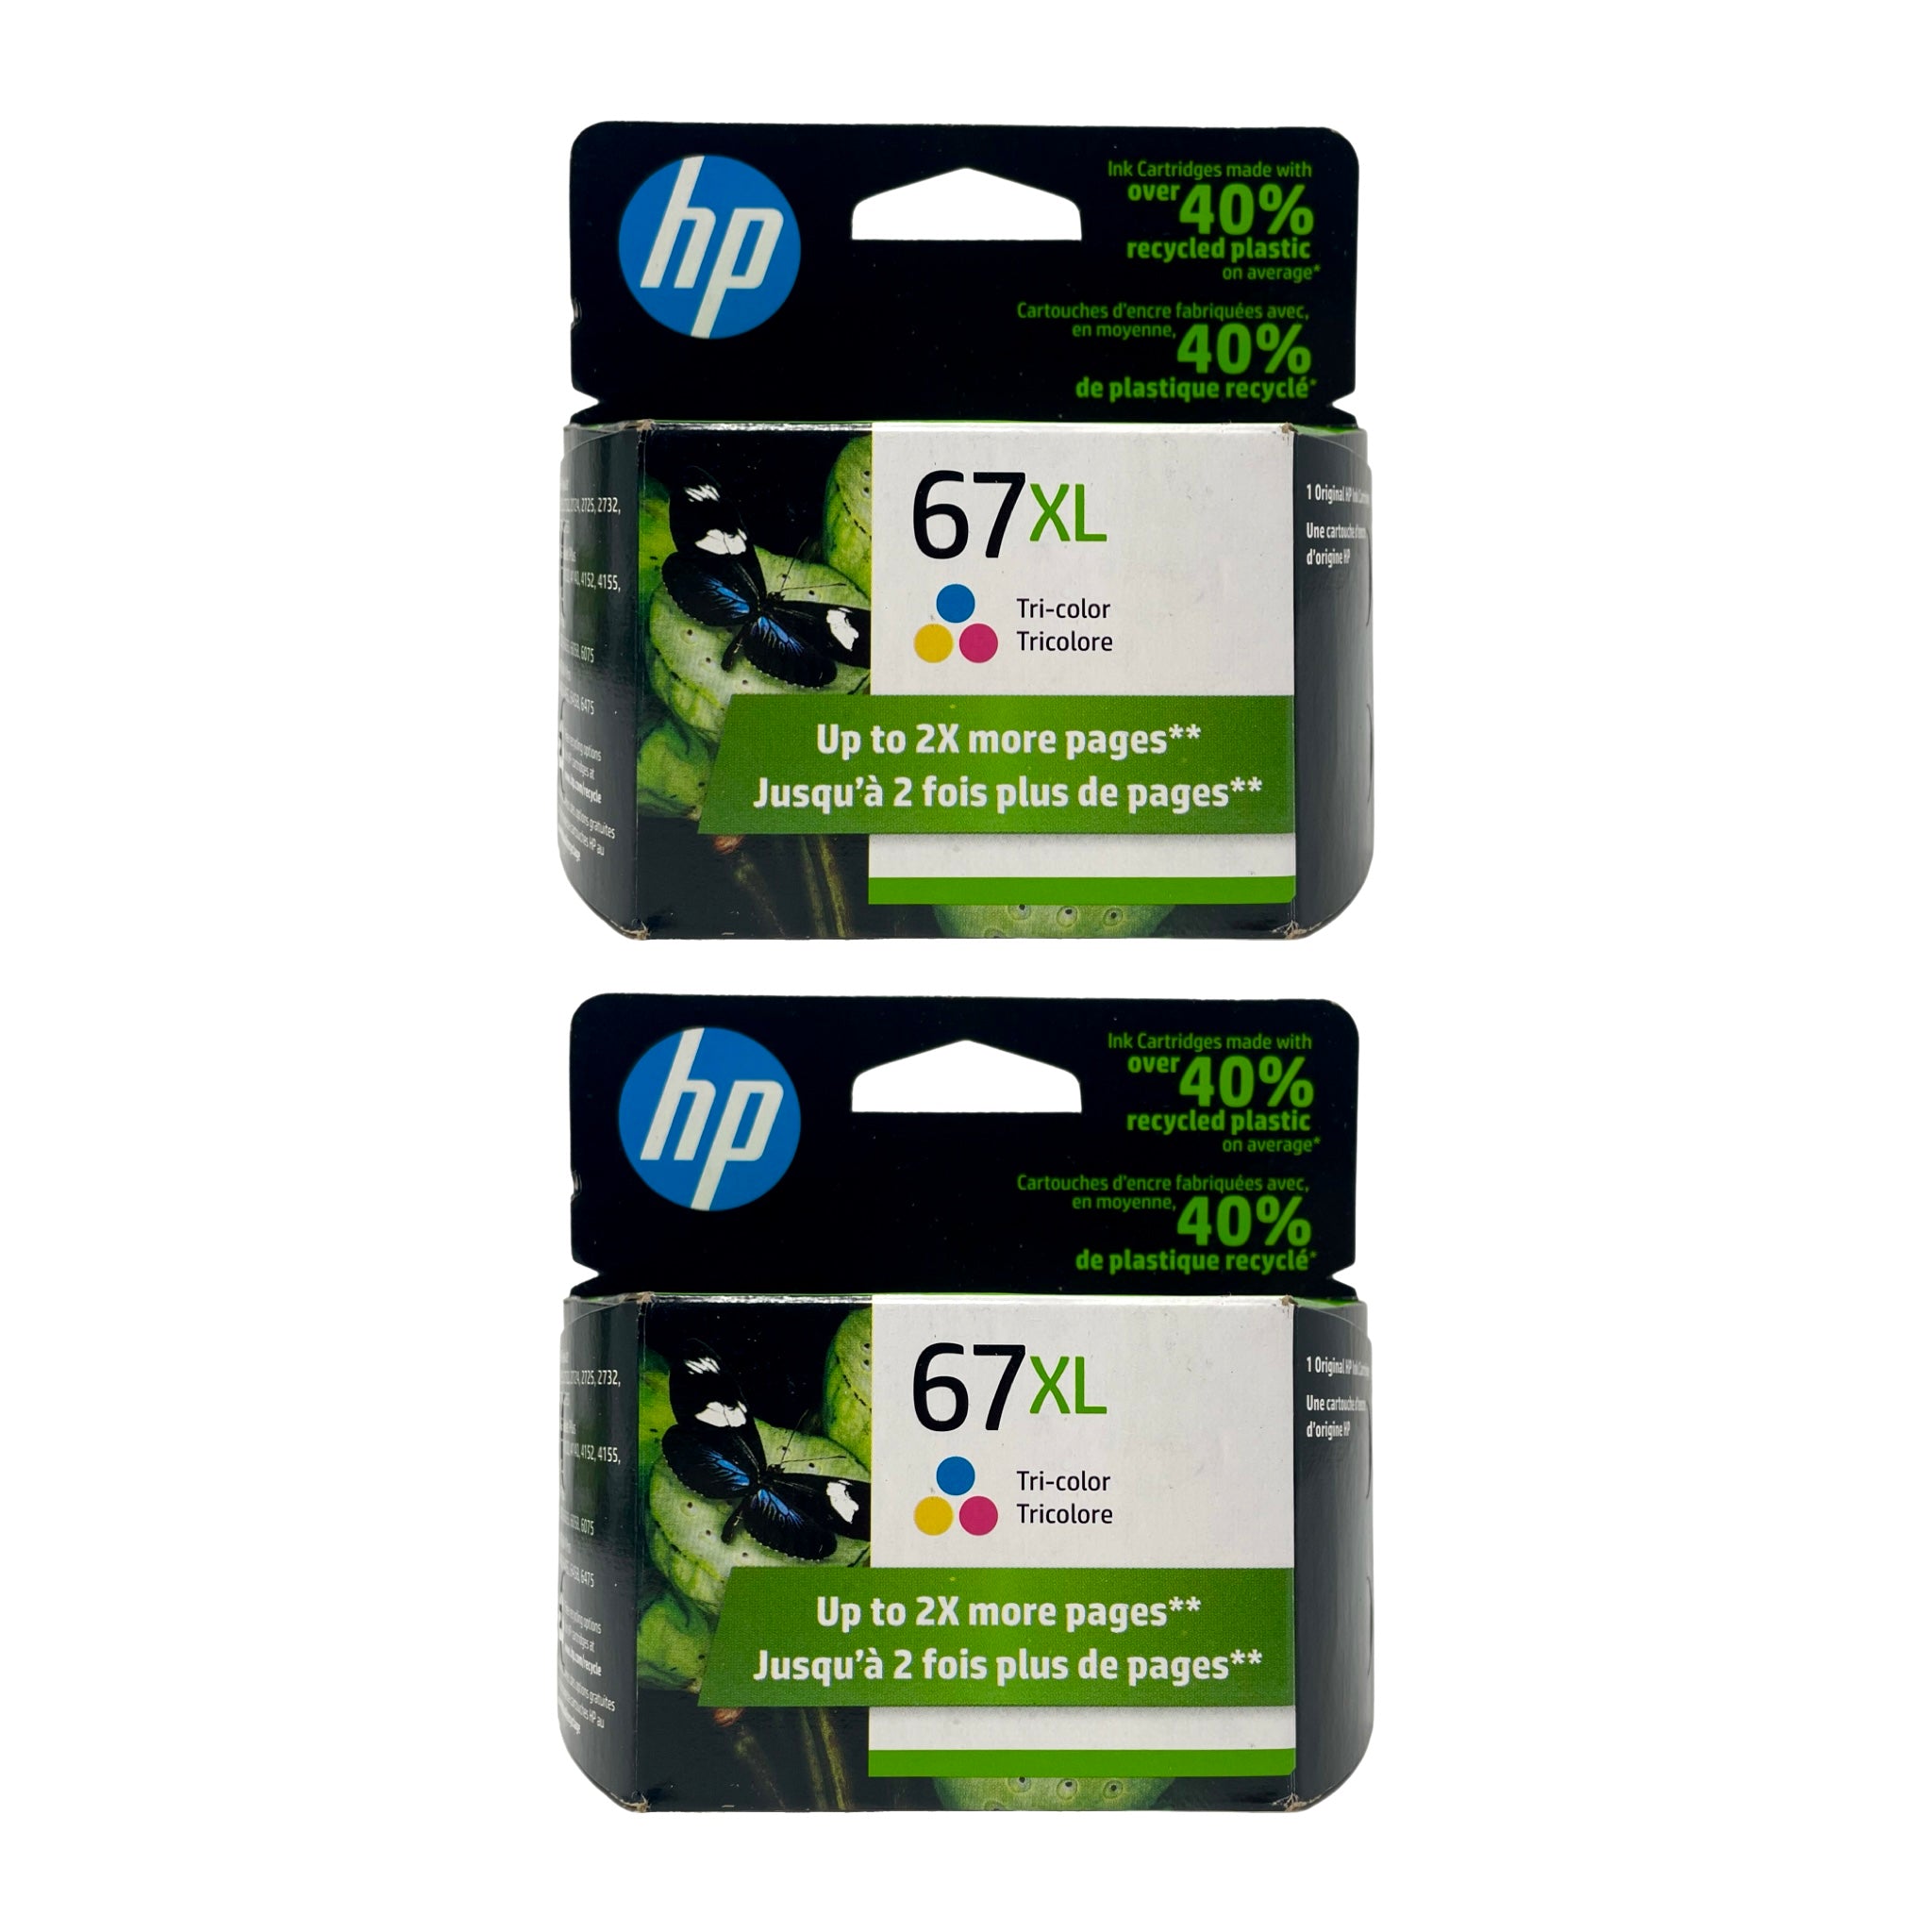 HP 67XL High Yield Ink 2 pack - Color - Original HP Ink Cartridges